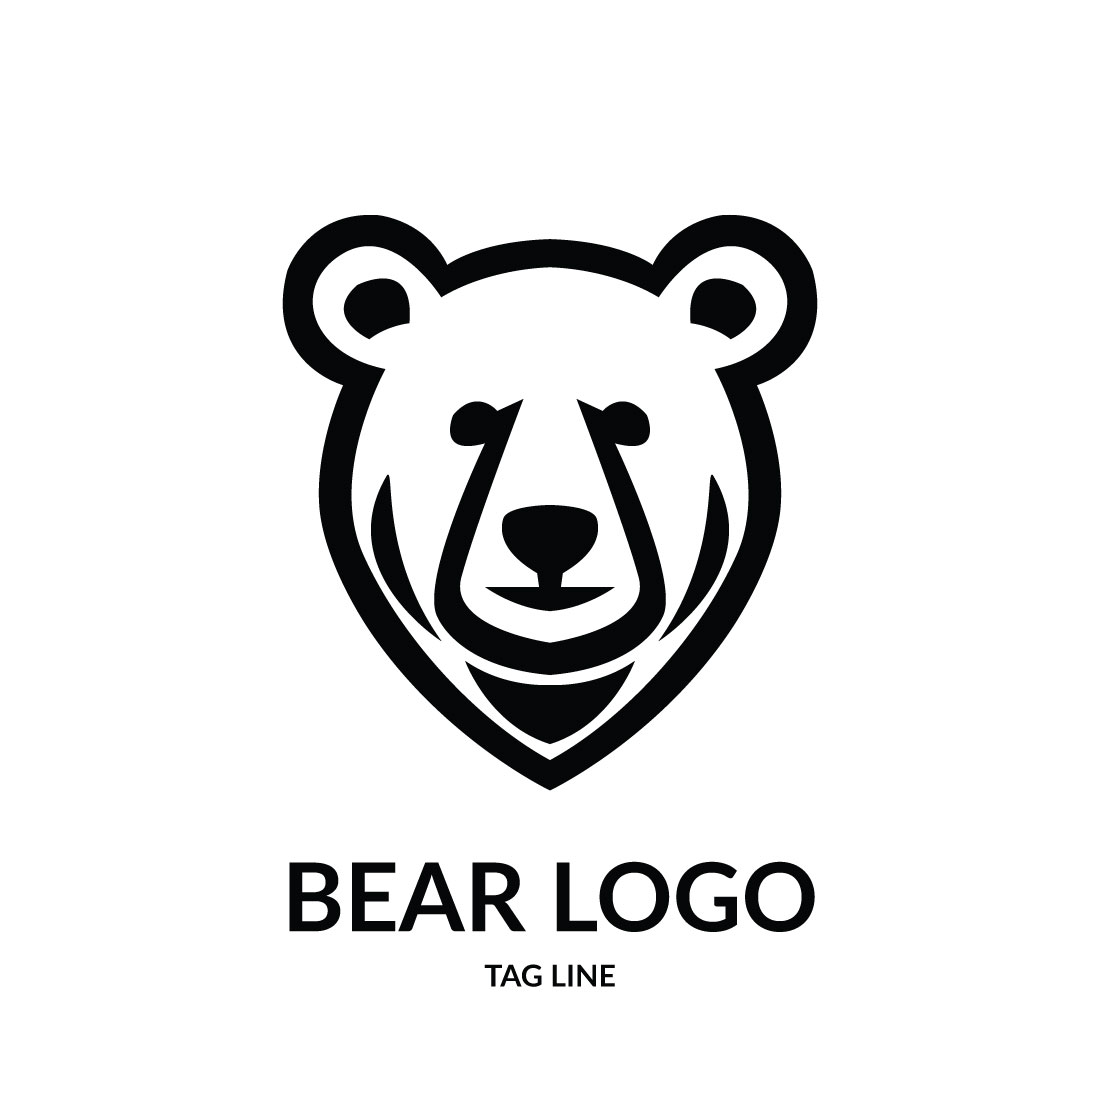 Bear Head Logo Template cover image.